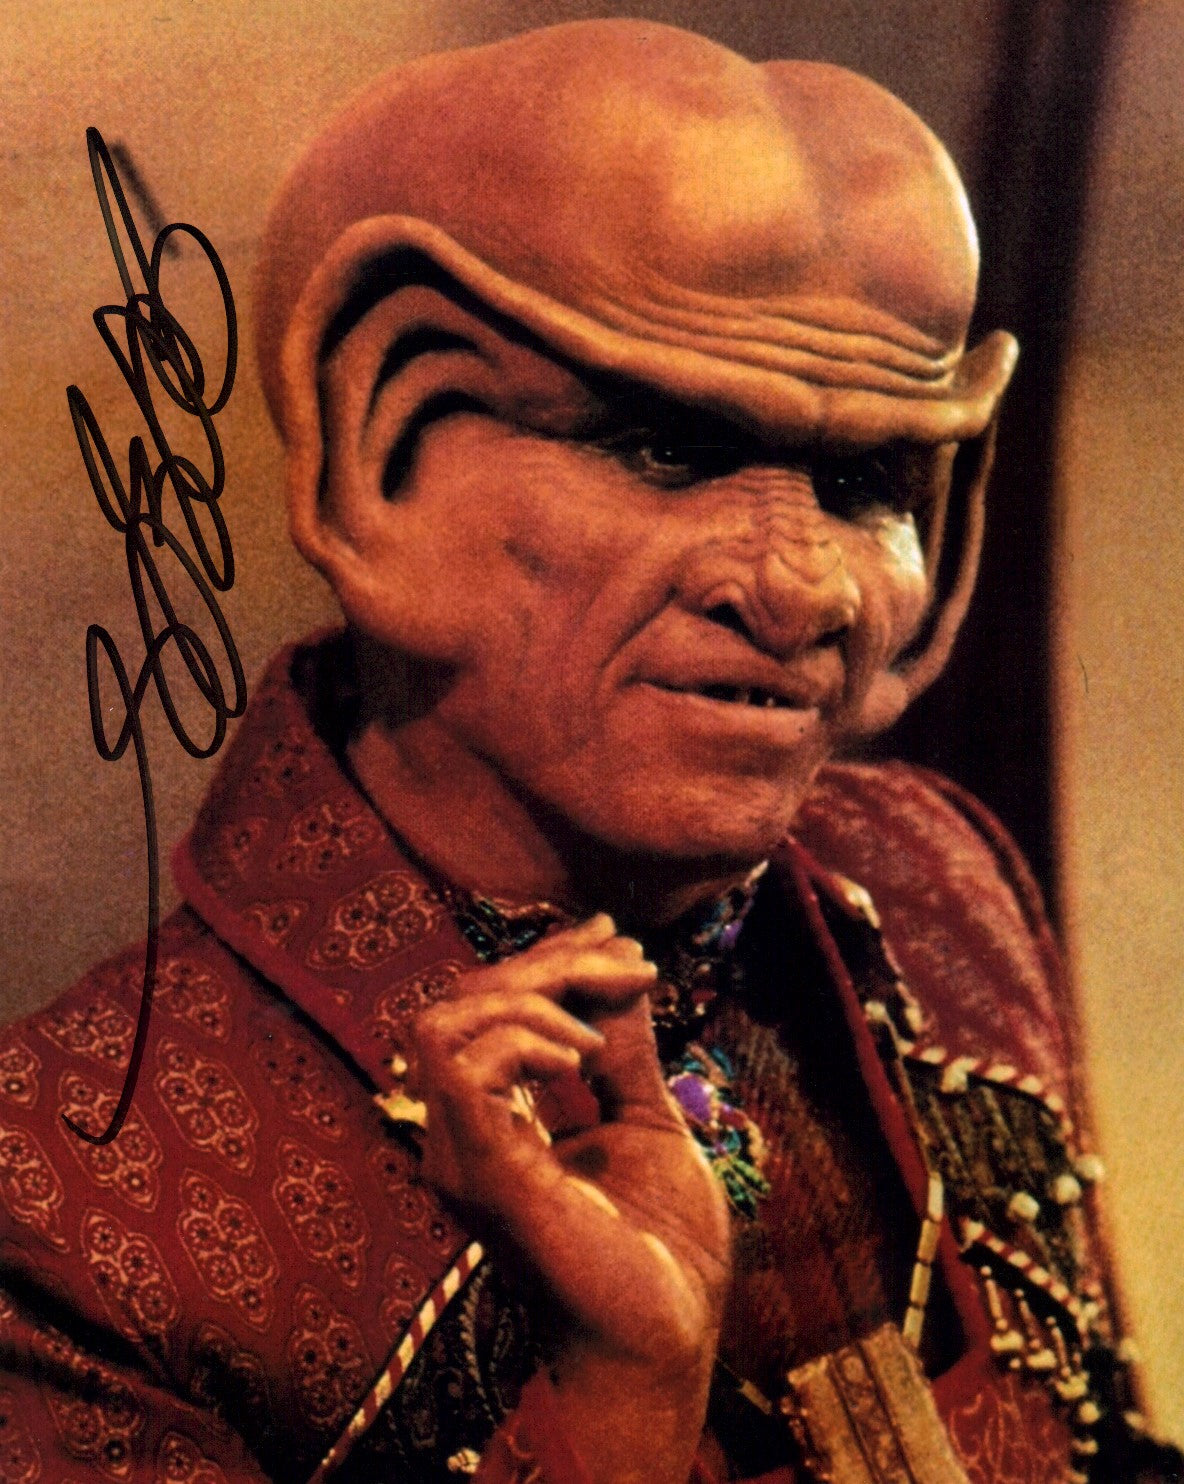 Jeffrey Combs Star Trek: DS9 8x10 Photo Signed Autograph JSA Certified COA GalaxyCon